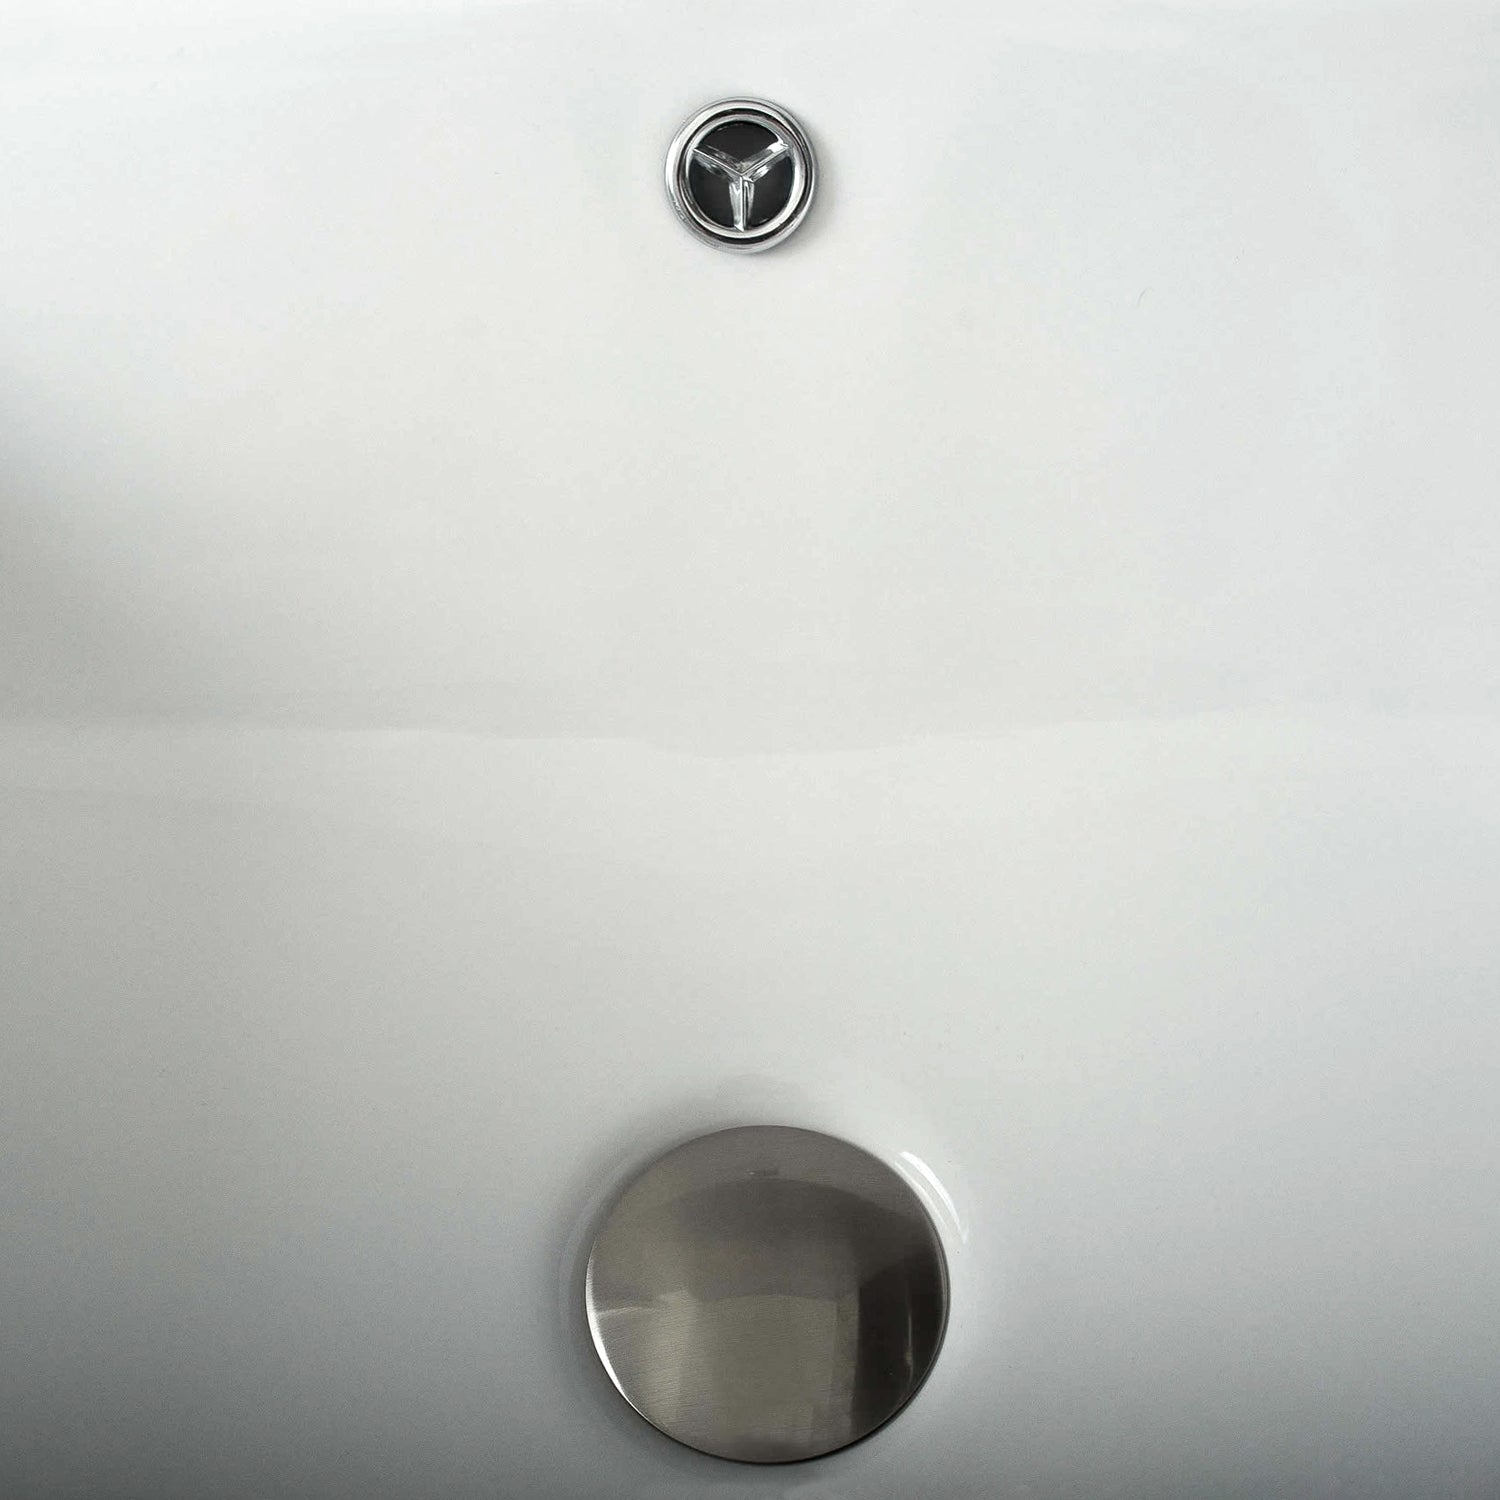 DAX Ceramic Rectangle Single Bowl Undermount Bathroom Sink, White Finish, 20-11/16" x 13-3/4 x 7-1/4 Inches (BSN-CL2023)